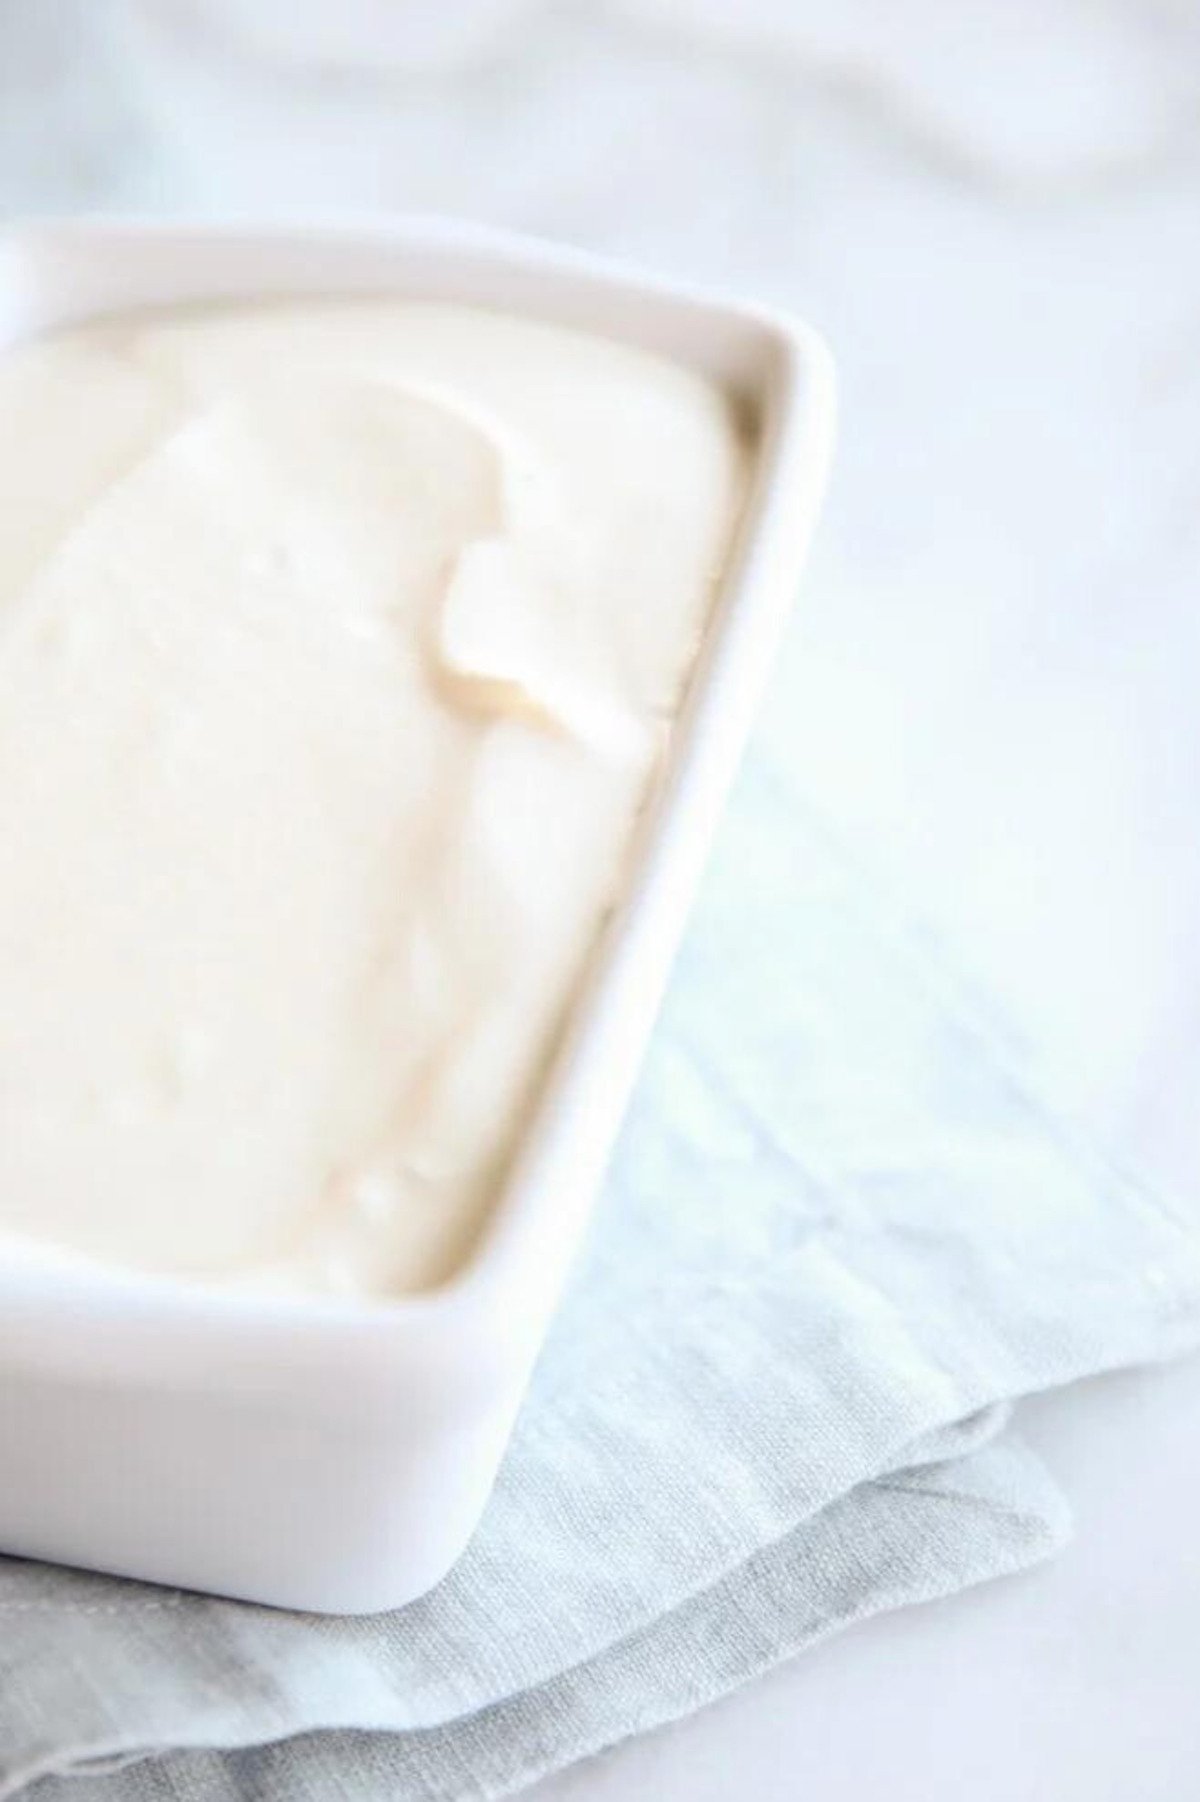 Homemade vanilla ice cream in a white dish on a napkin.